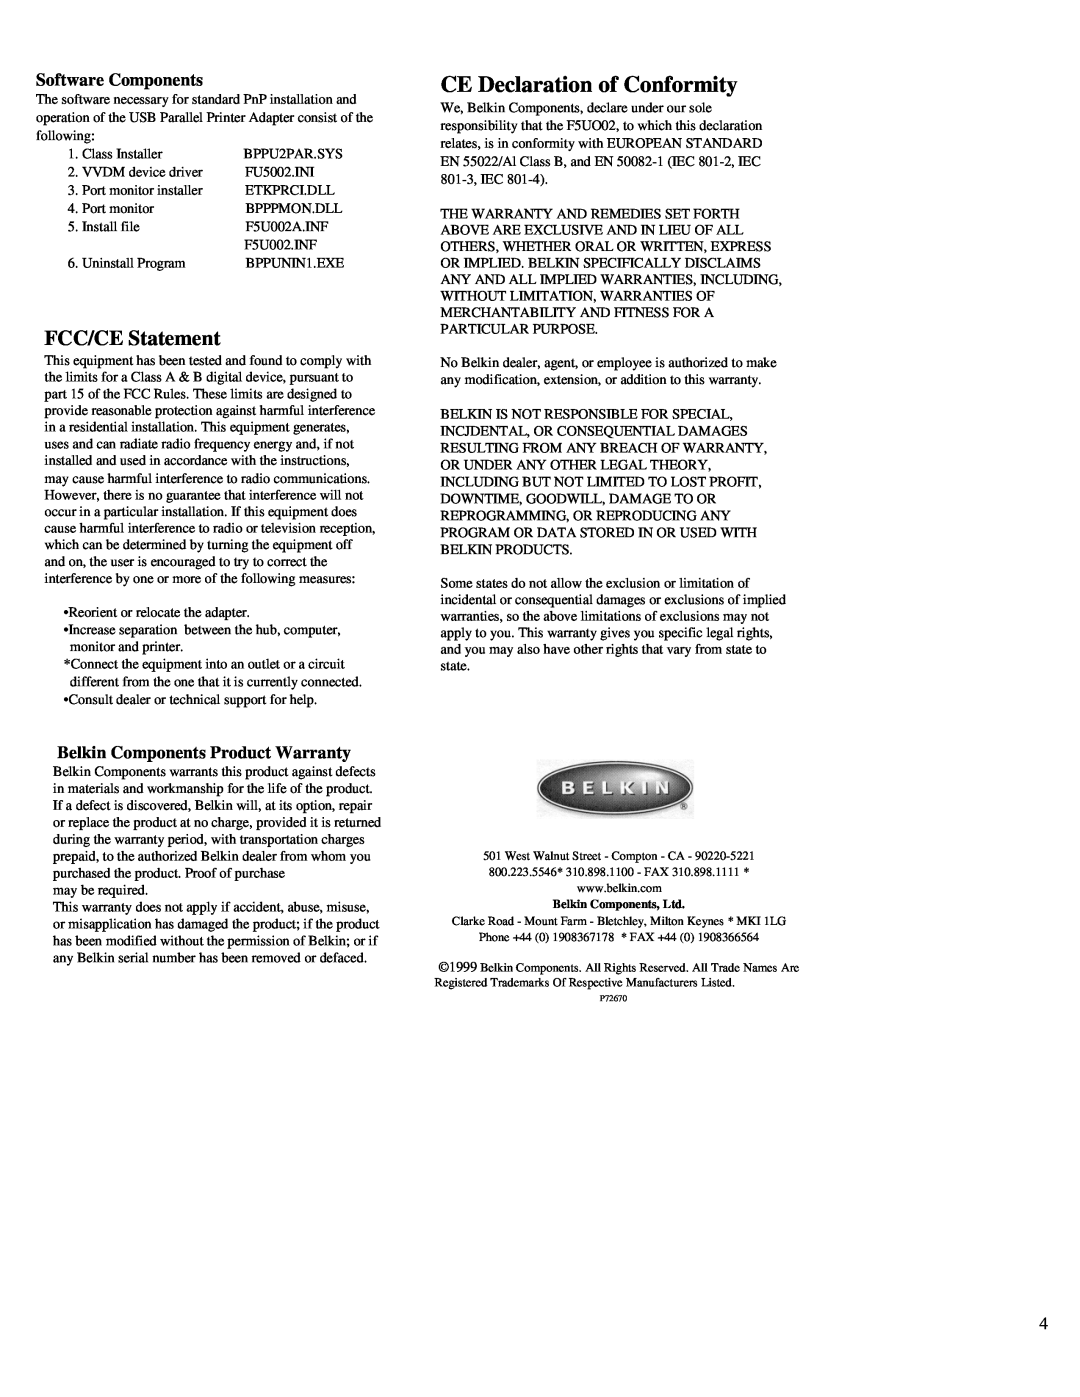 Belkin F5U002 Software Components, Belkin Components Product Warranty, CE Declaration of Conformity, FCC/CE Statement 